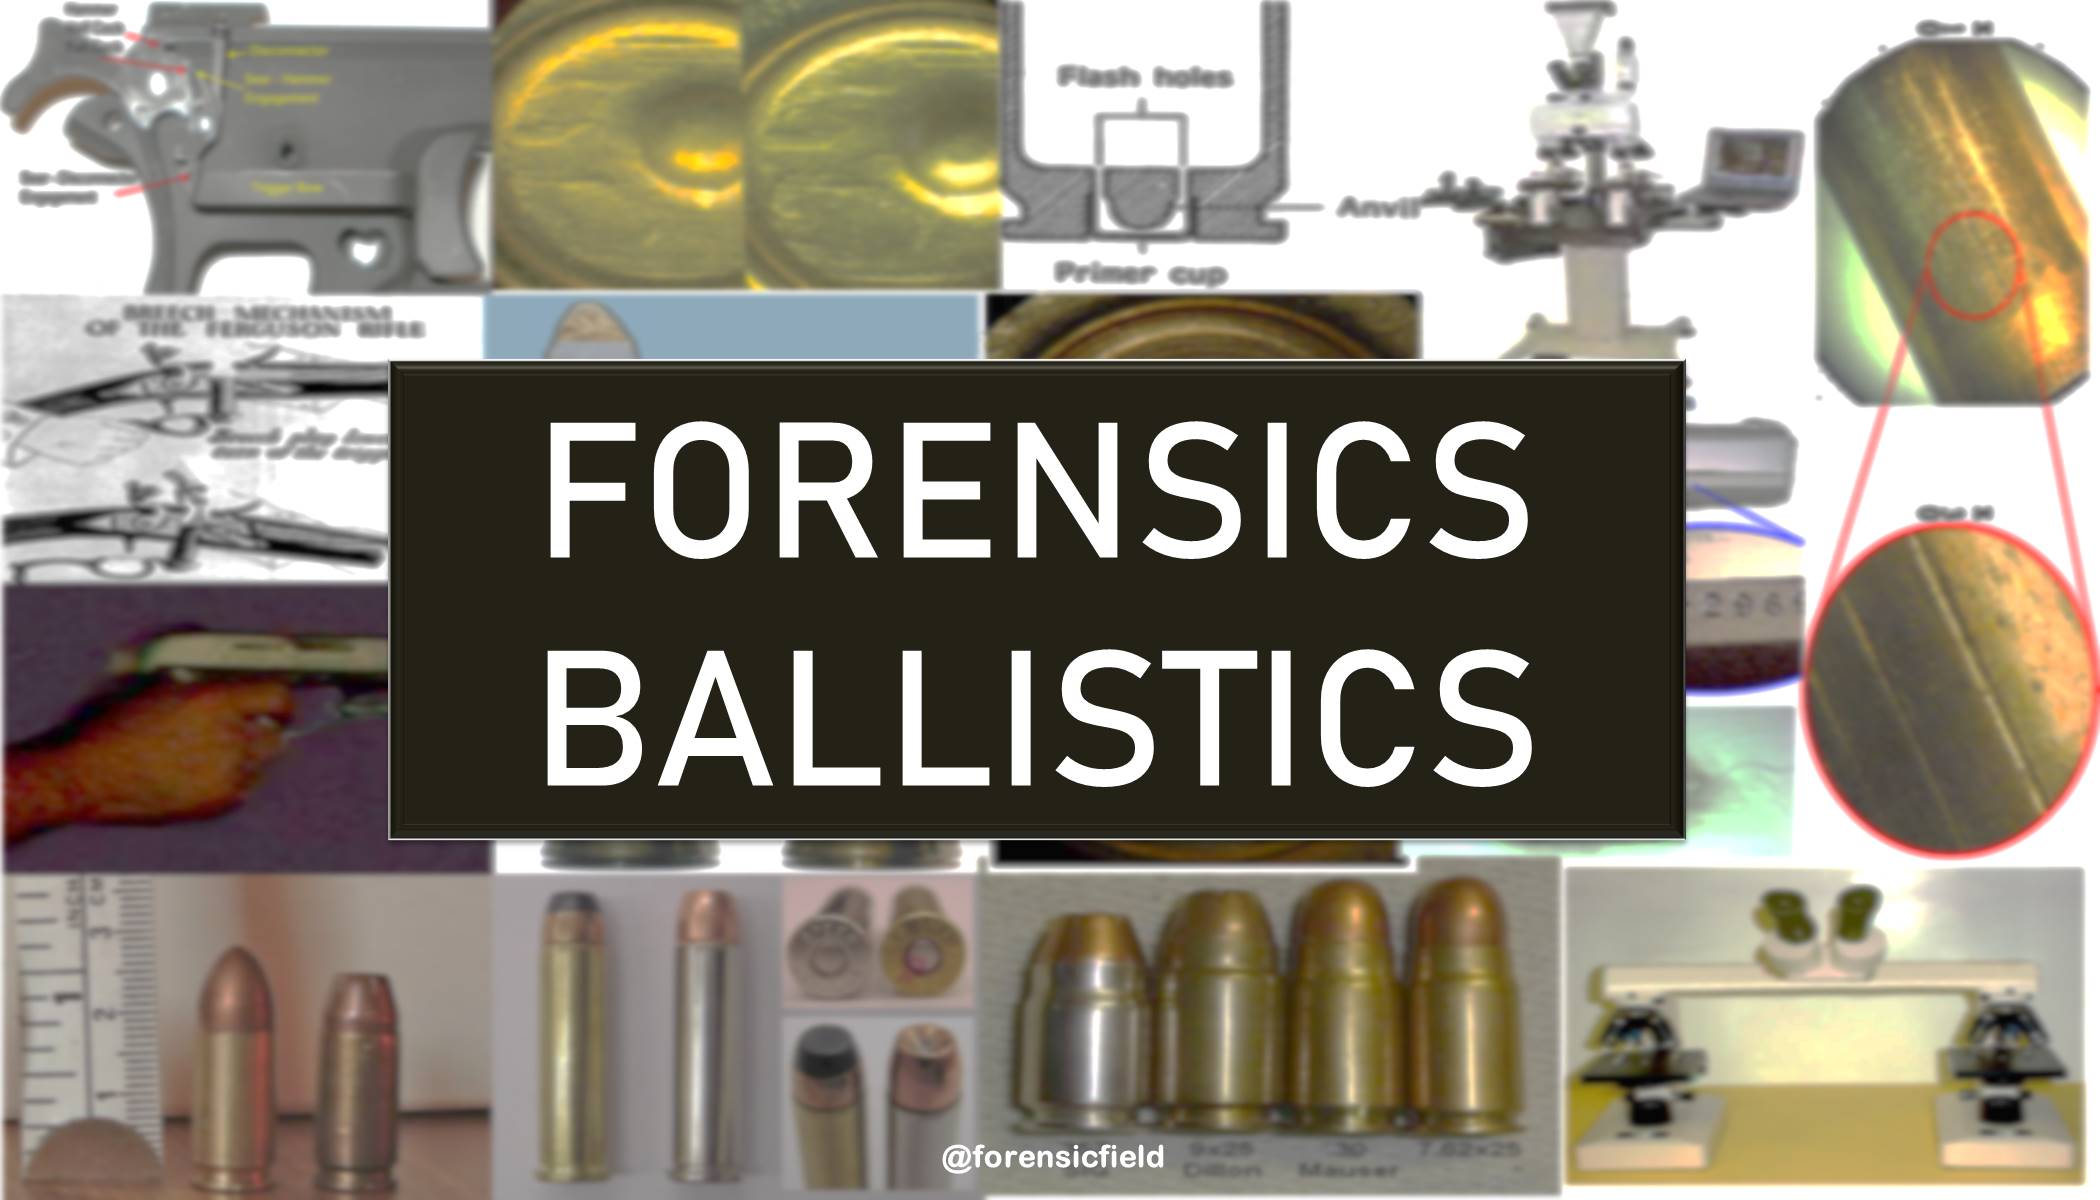 FORENSICS BALLISTICS - Forensic's blog